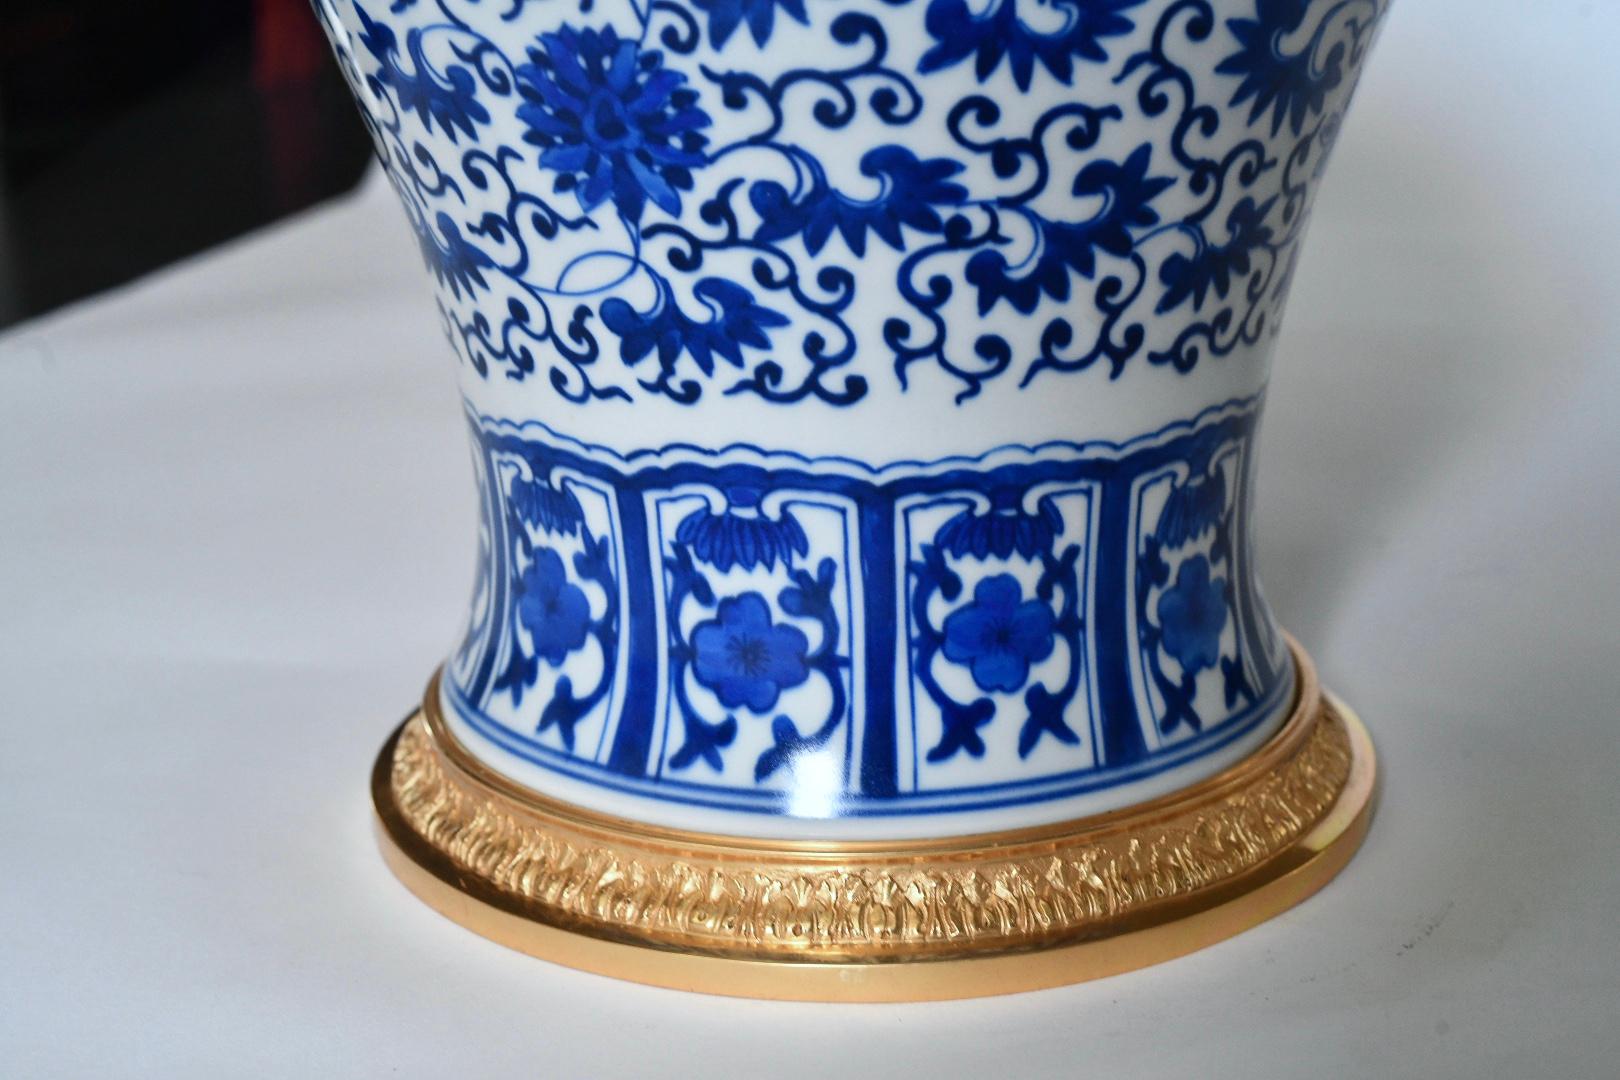 vintage blue and white porcelain lamps